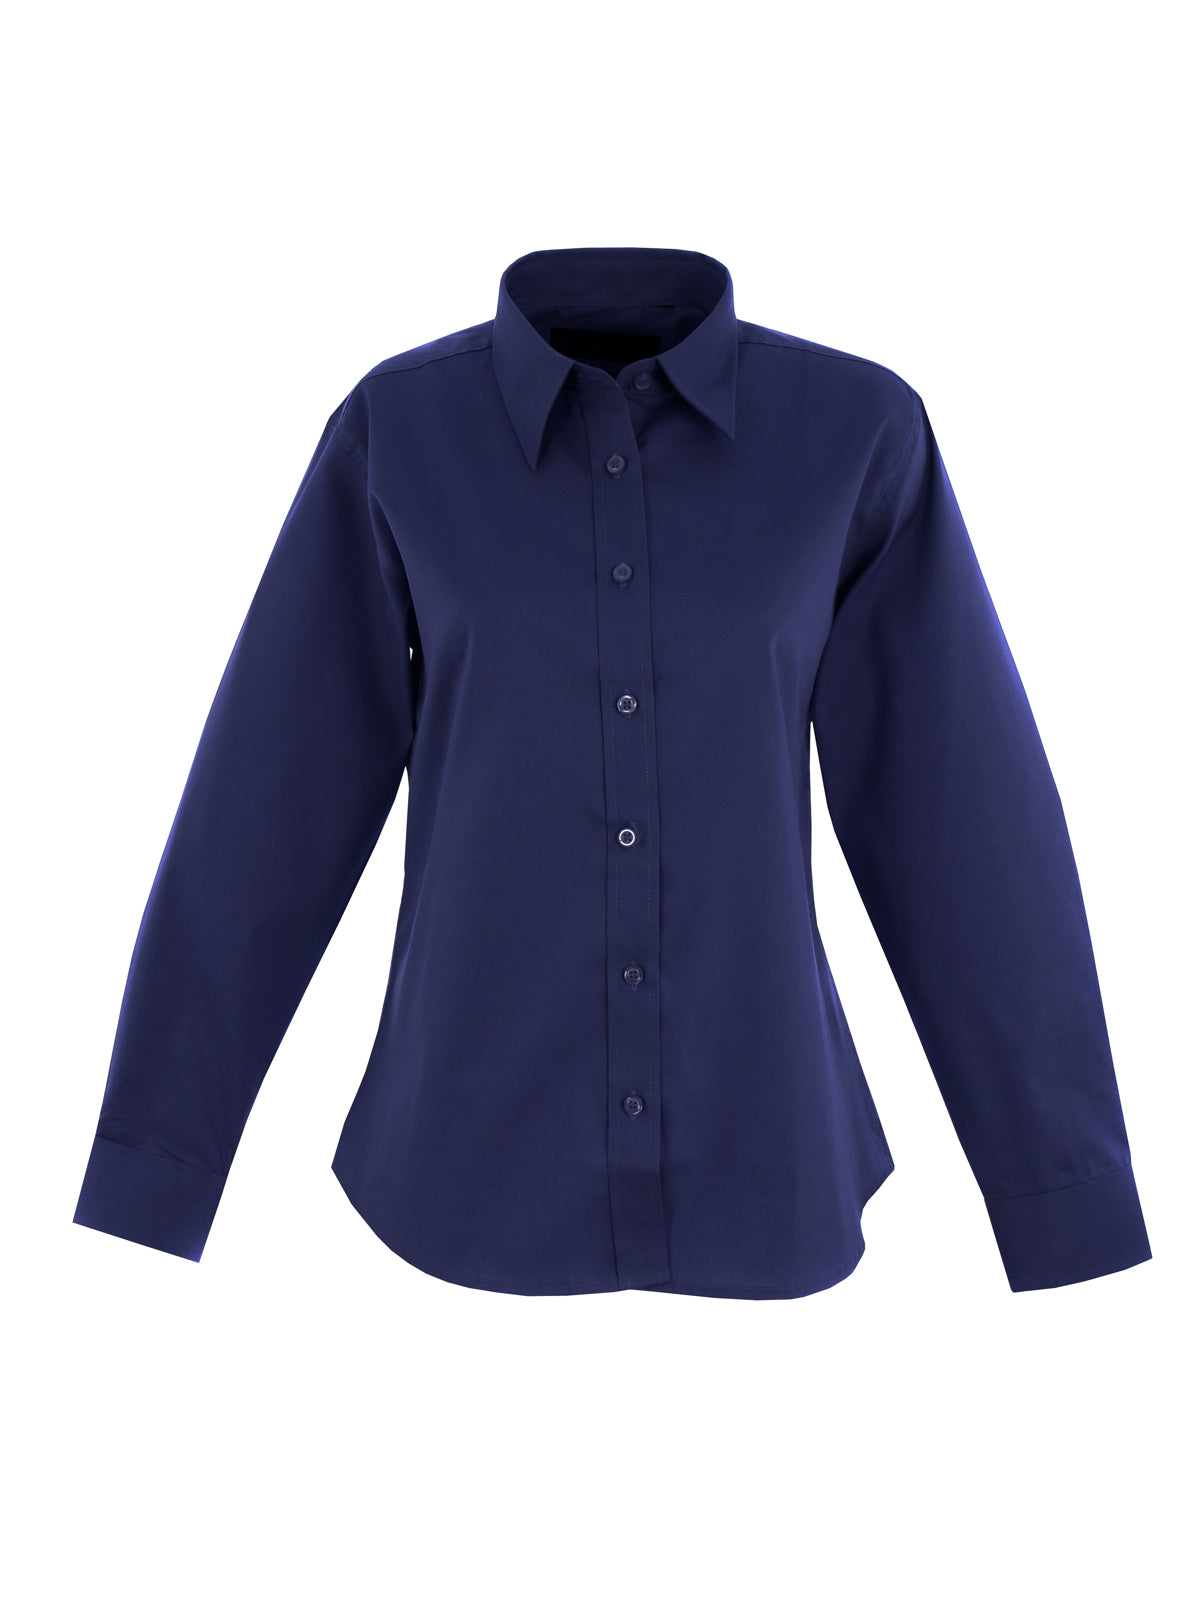 Uneek Ladies Pinpoint Oxford Full Sleeve Shirt UC703 - Navy